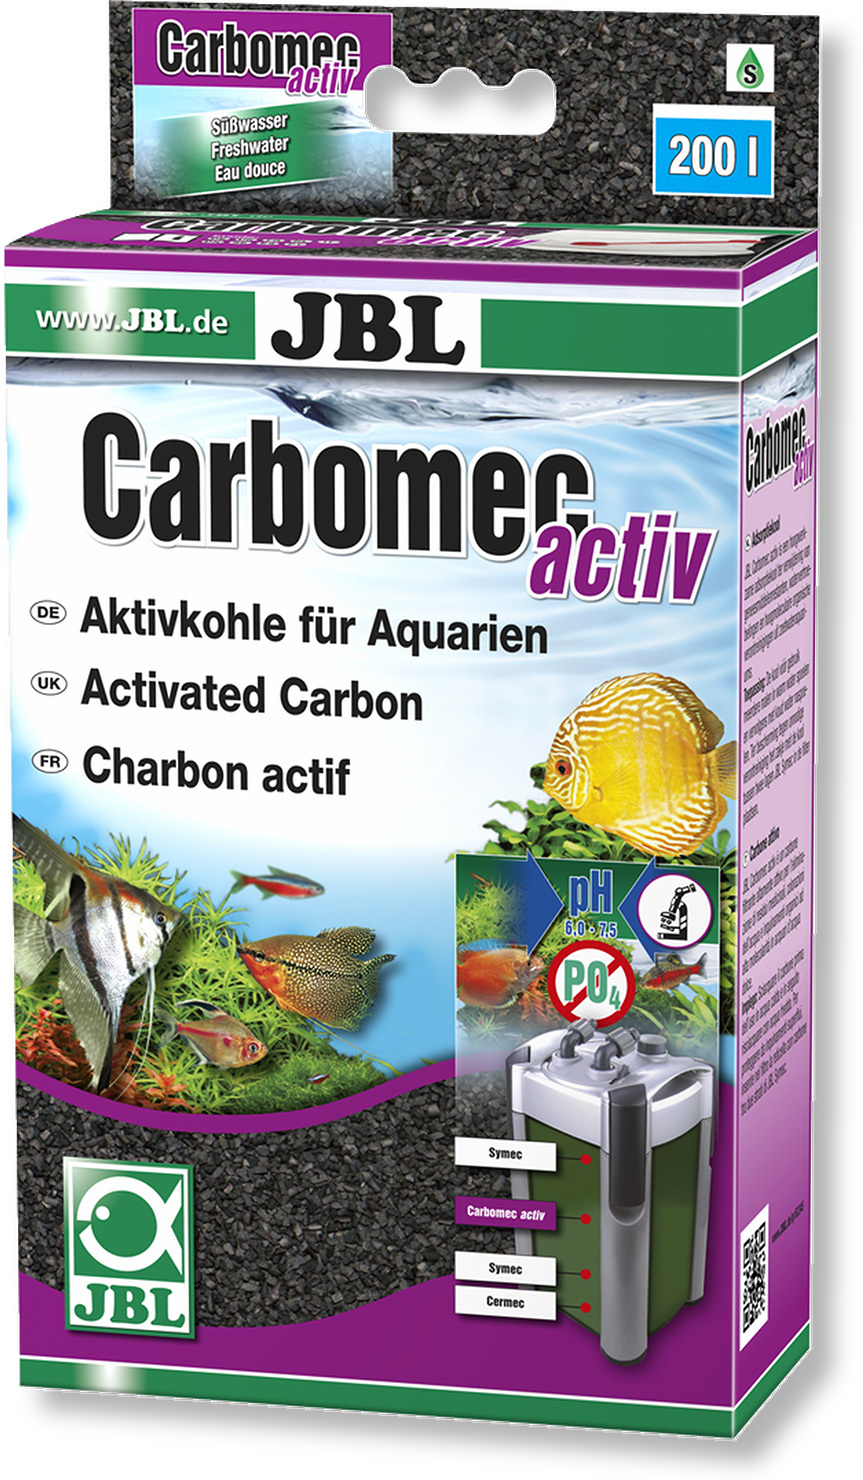 JBL Carbomec activ material filtrant